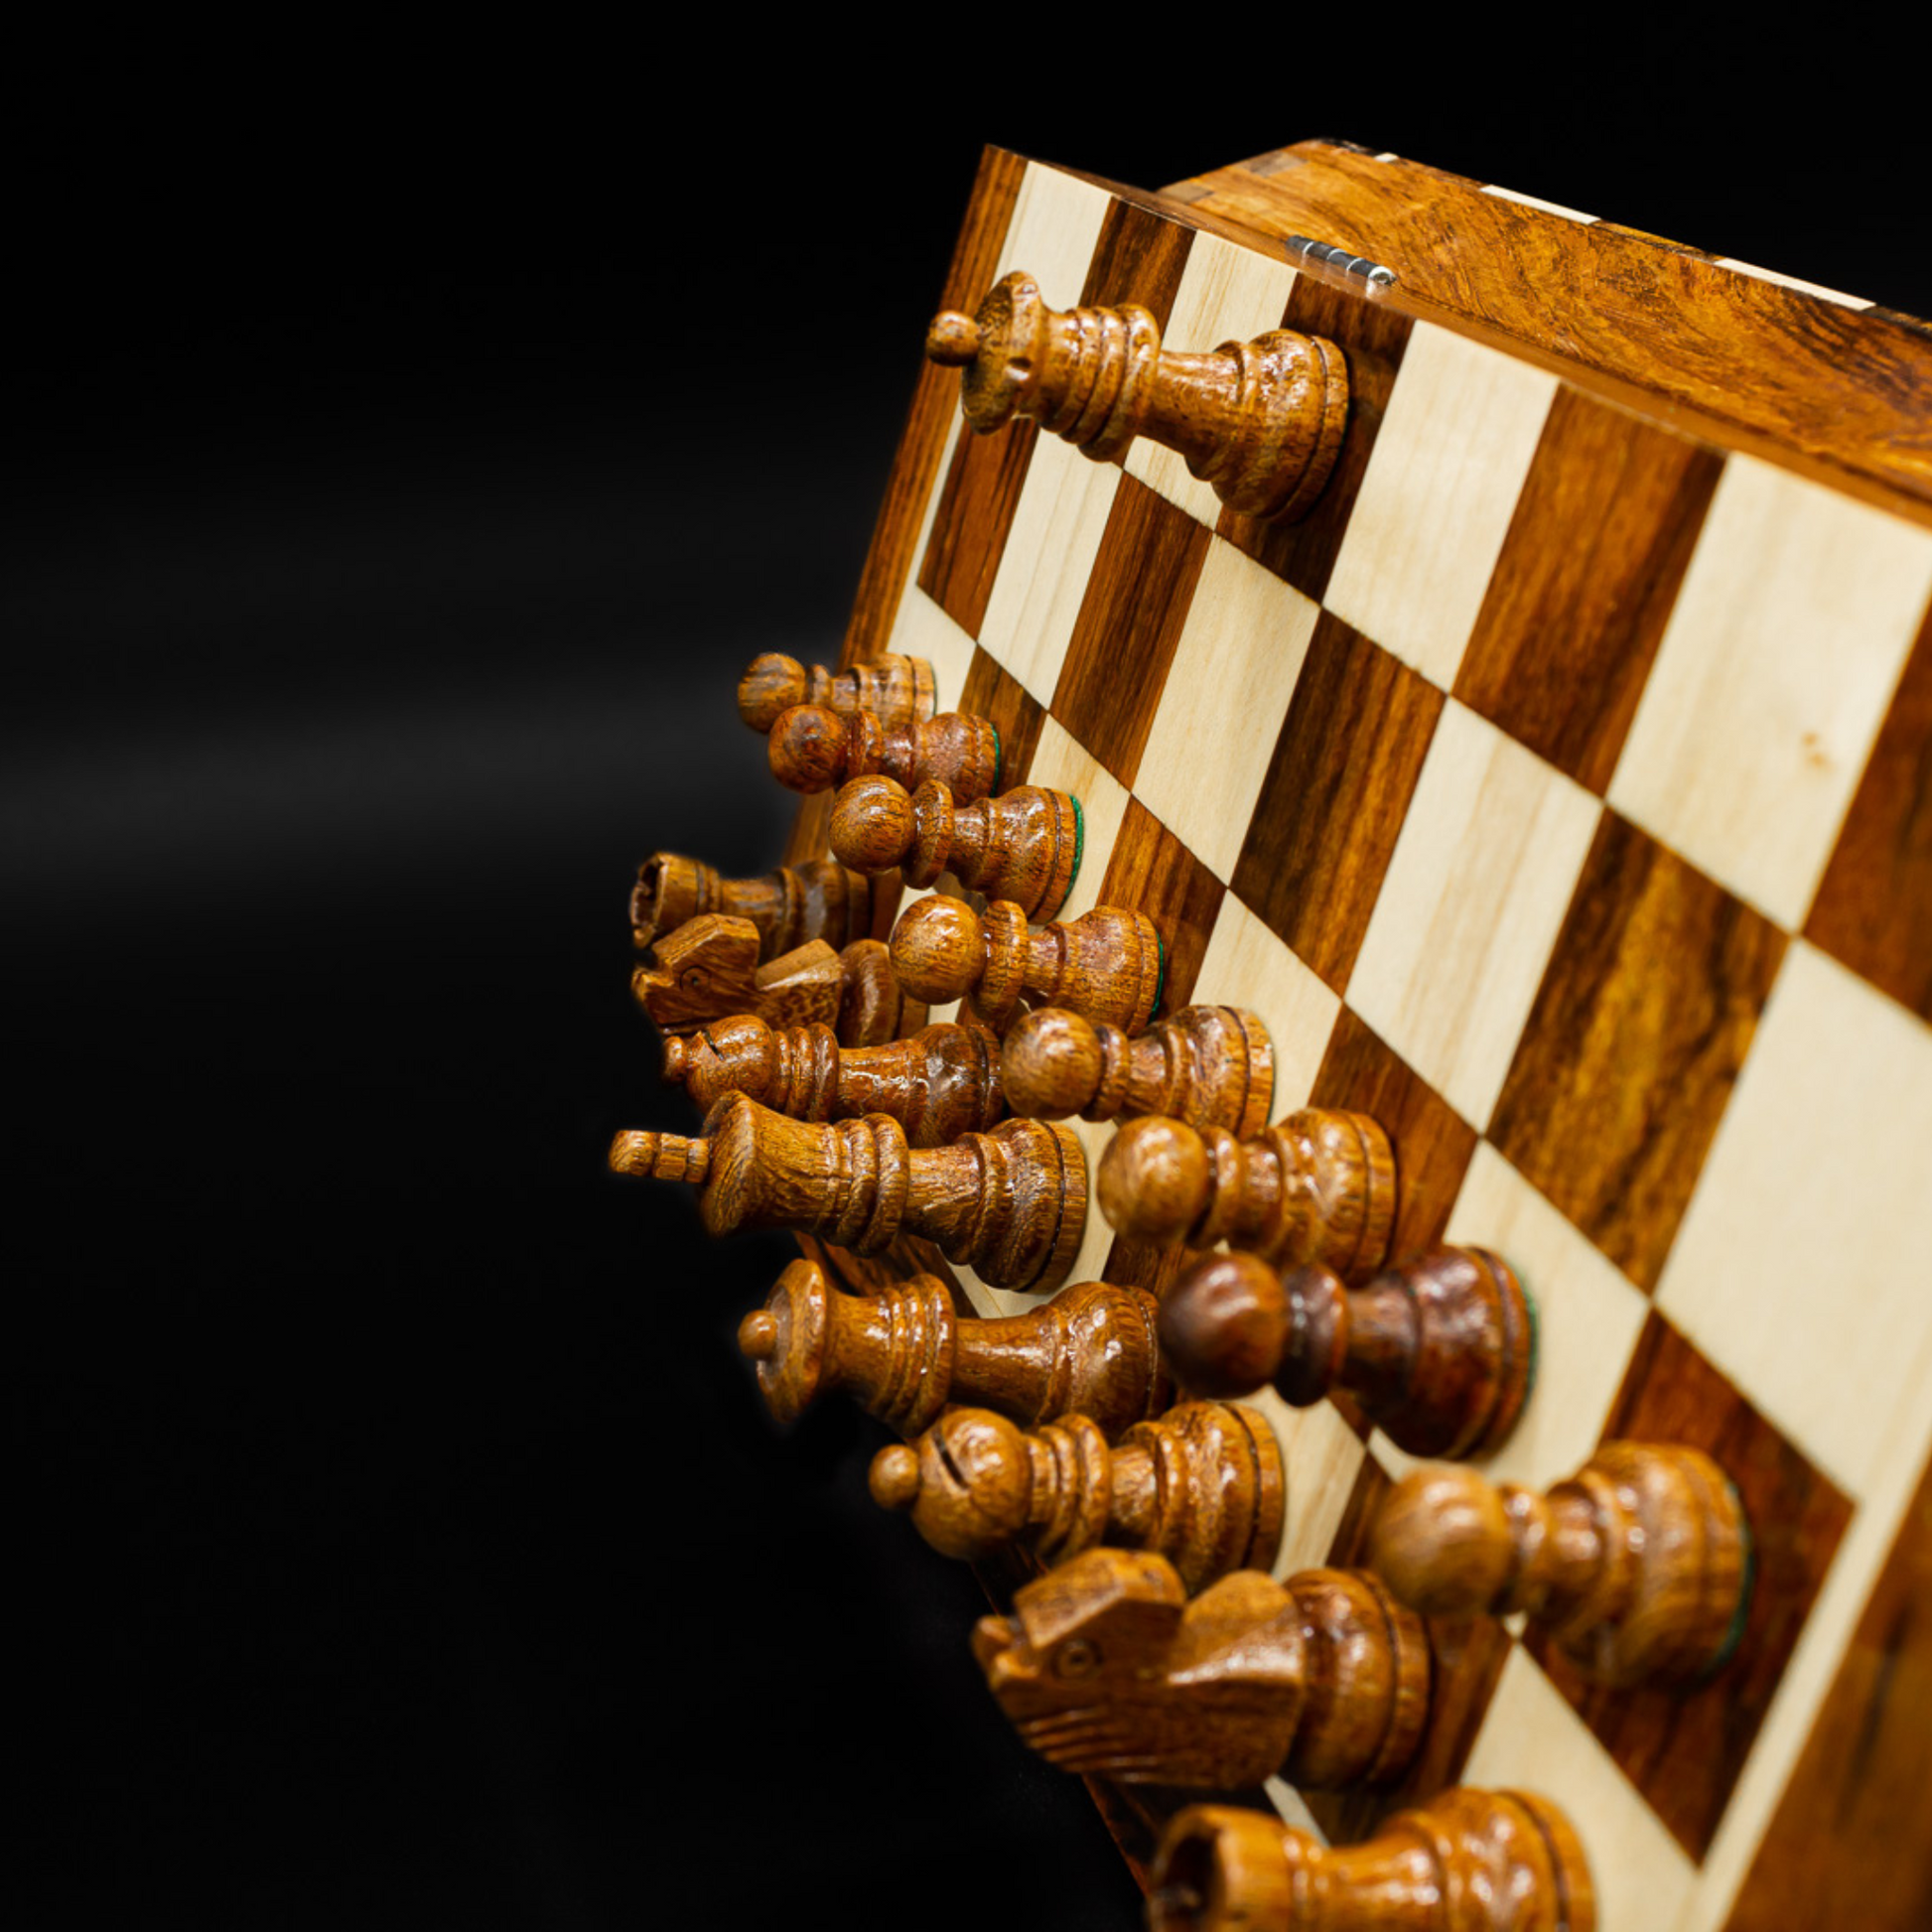 Abertura Ruy Lopez em 60 seg #xadrez #chess #ajedrez #echecs #fyp #che